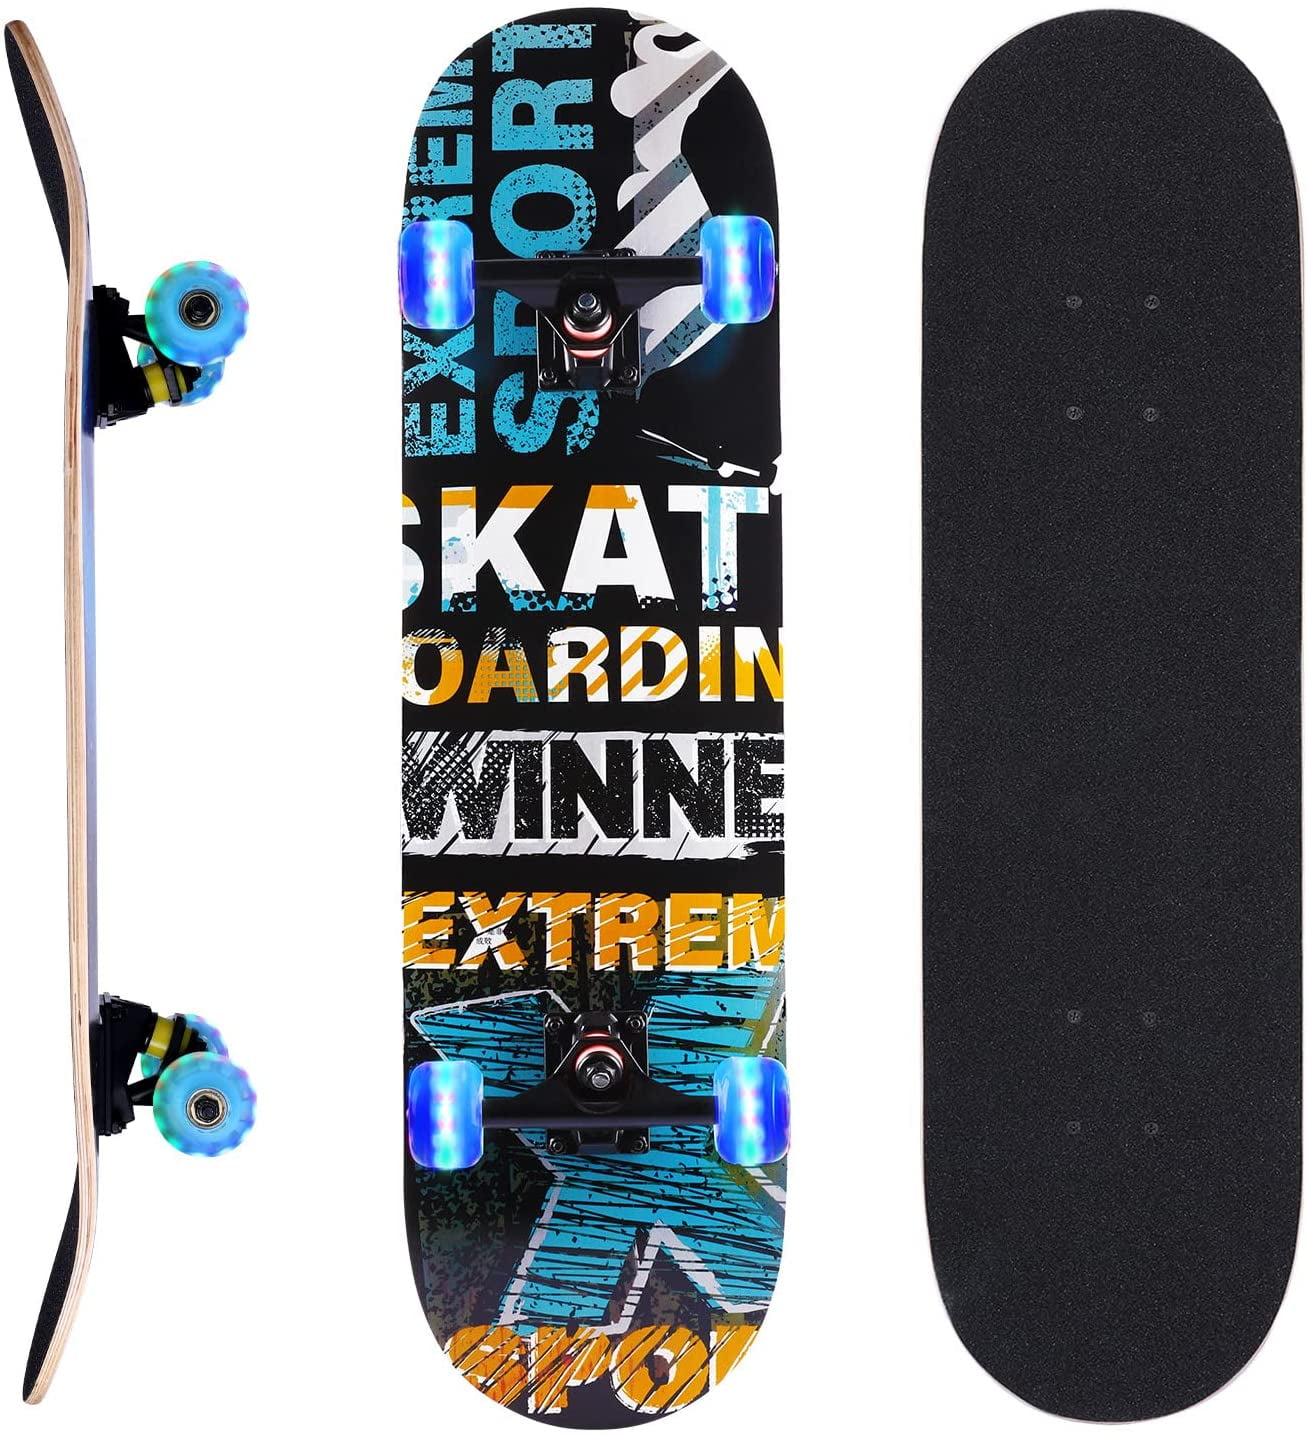 31x 8 inch Skateboard Complete Pro Skate Deck 7Layer Maple Wooden for Beginner 